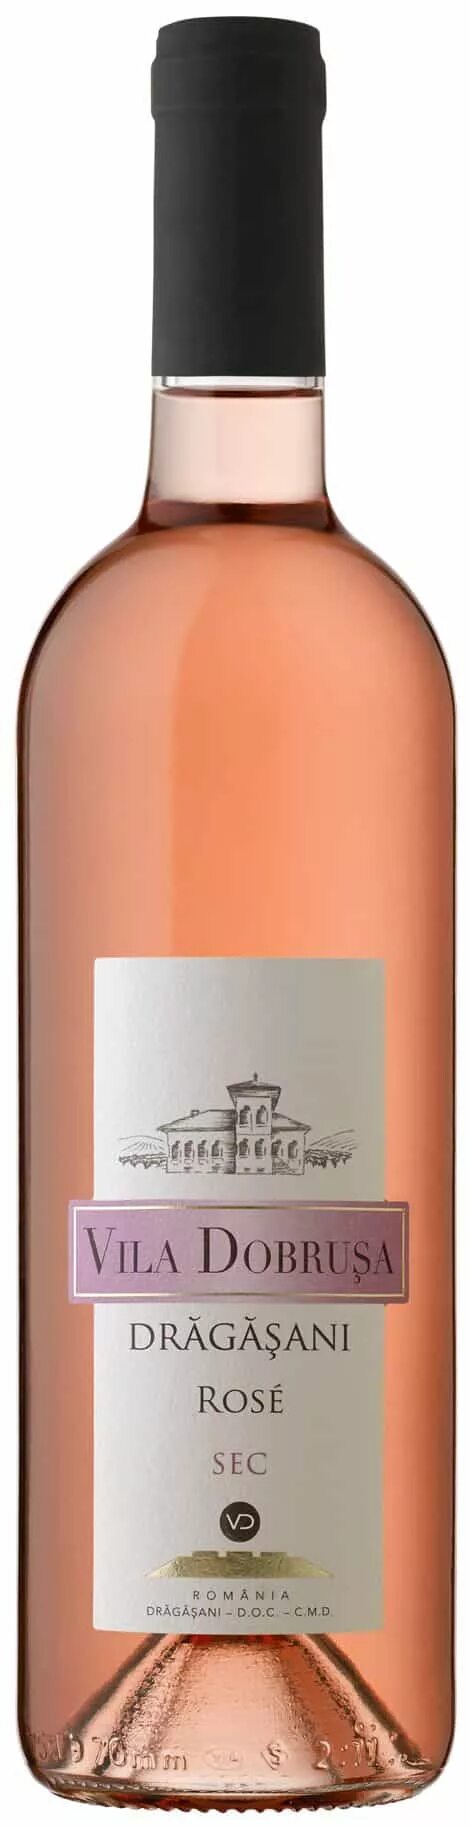 Вино Zweigelt Rose. Zweigelt Rose вино розовое сухое вино. Вино Schubert Rose Wairarapa, 0.75 л. Вино Schubert Block b Pinot Noir 2015 0.75 л.